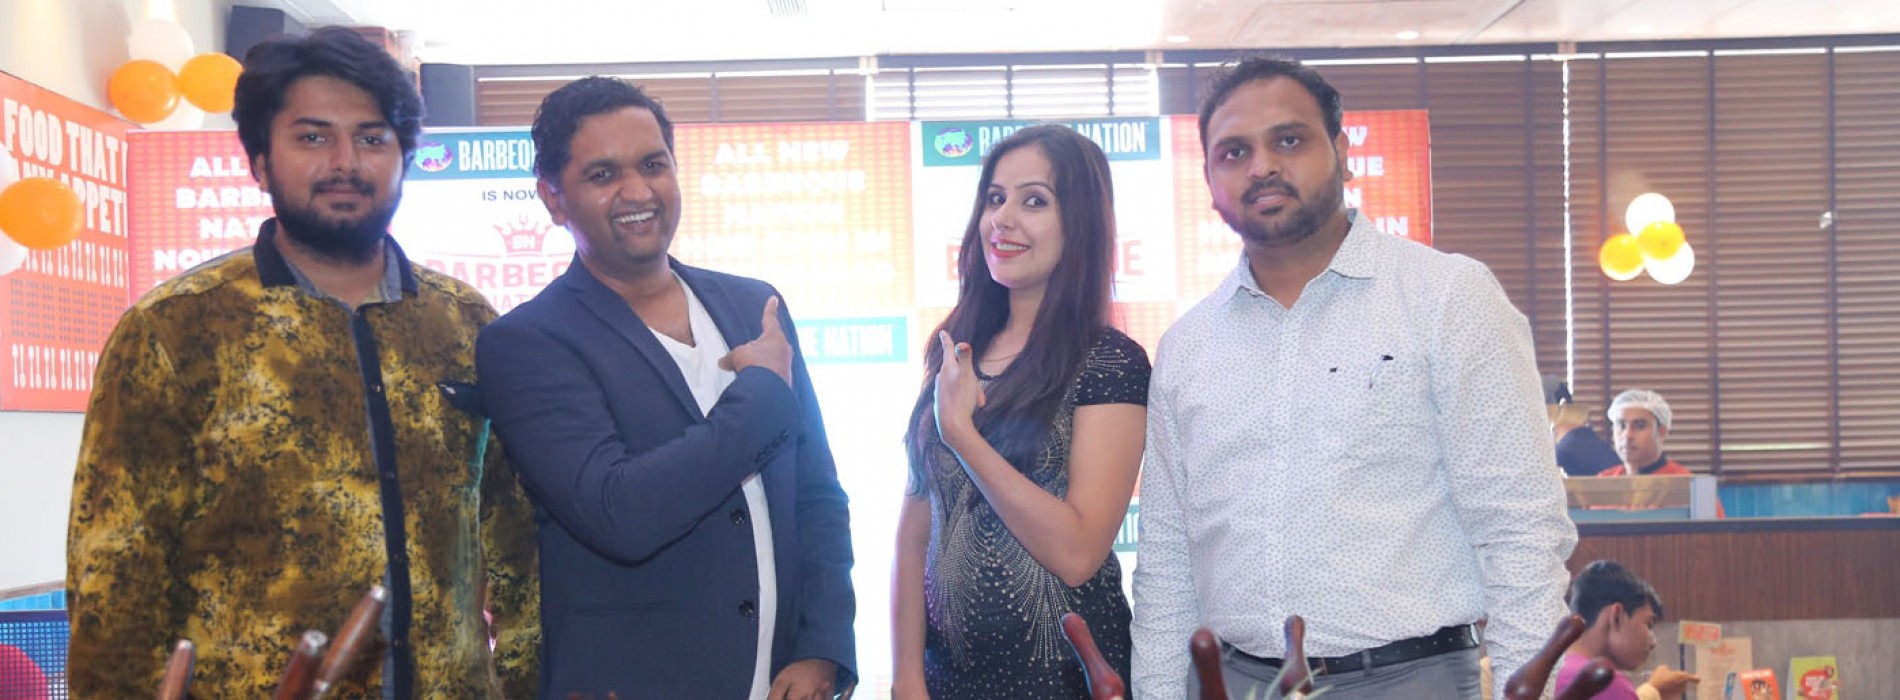 Barbeque Nation restaurant launches in Aurangabad